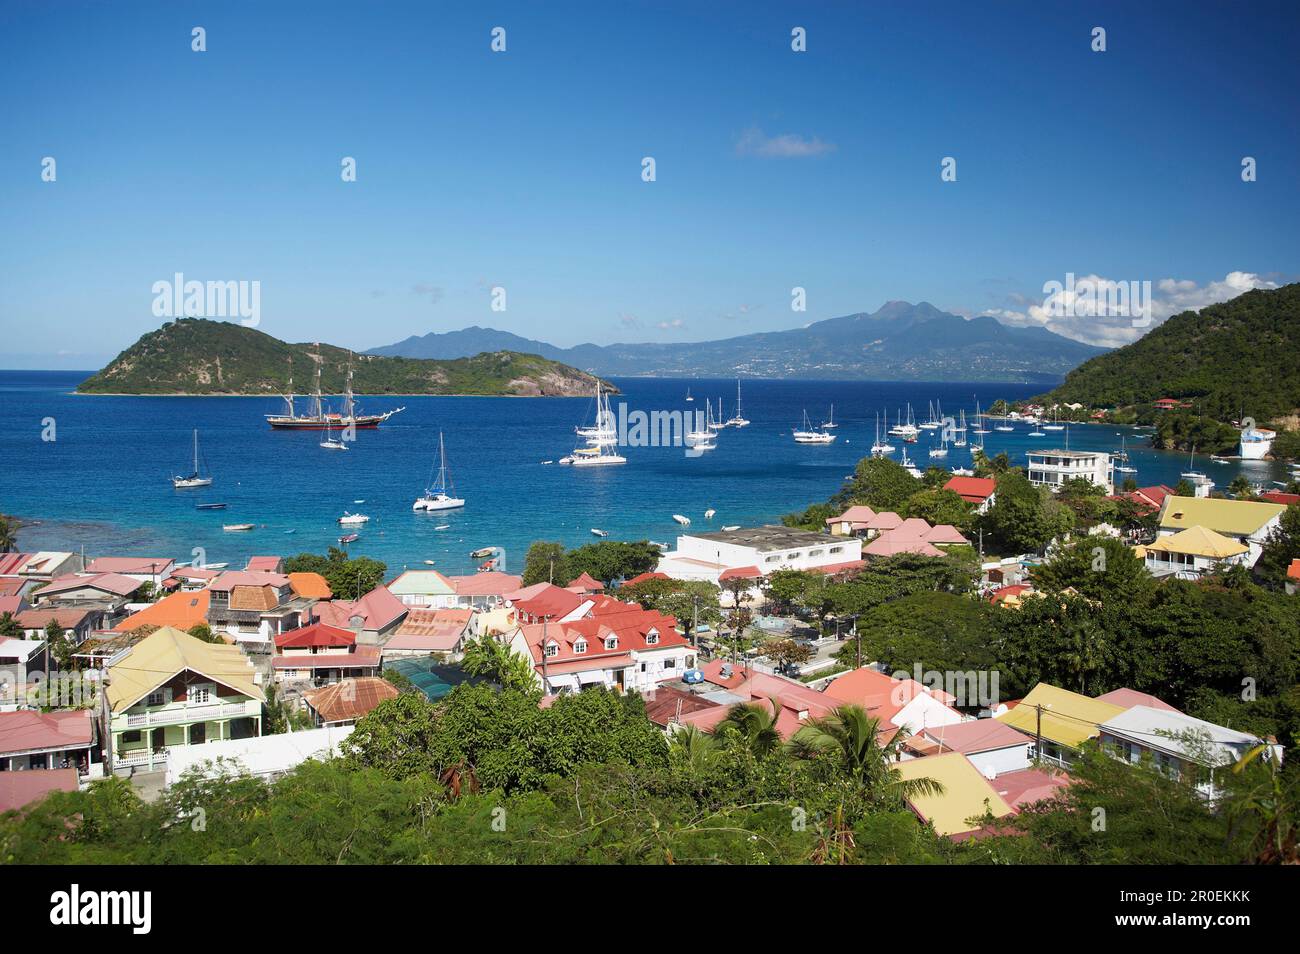 Aerial view of Terre-de-Haute, Les Saintes Islands, Guadeloupe, Caribbean Sea, America Stock Photo